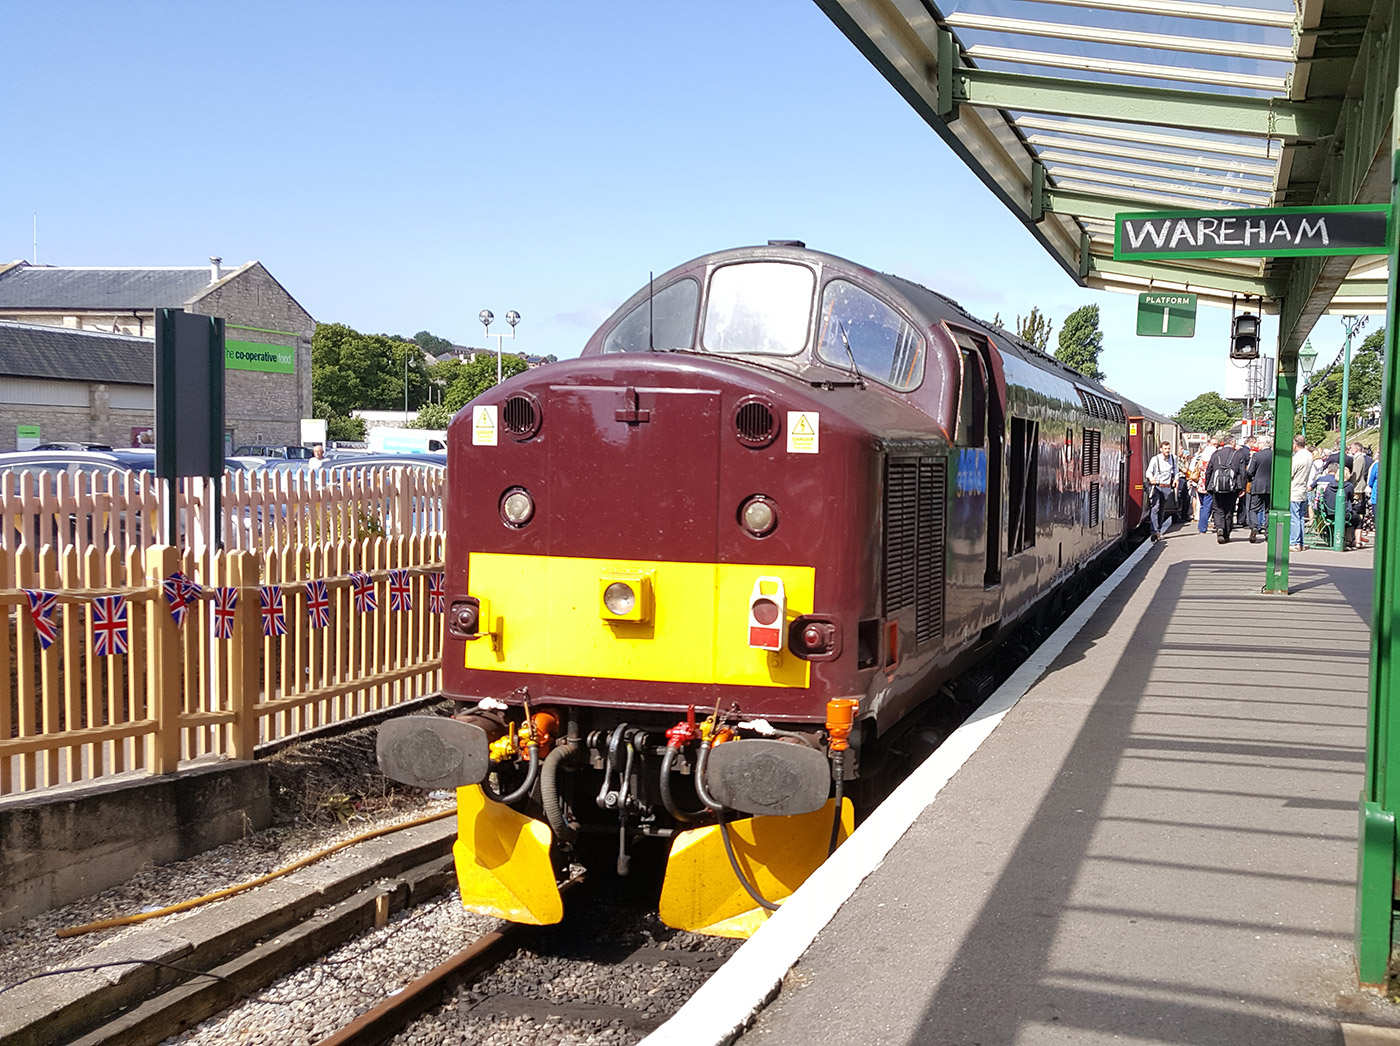 First Regular Train to Wareham